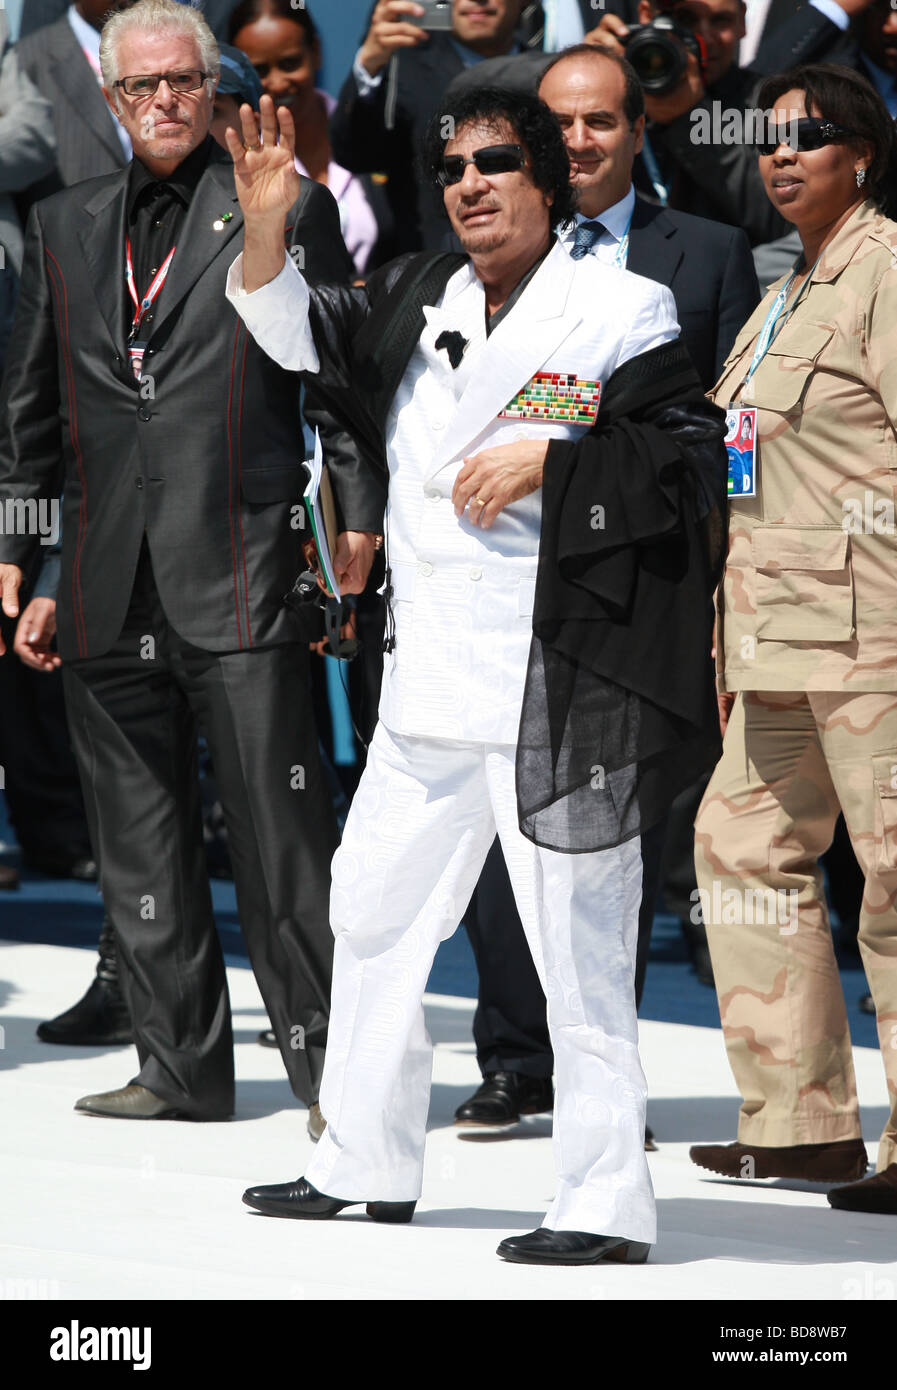 Muammar al-GADDAFI Gaddafi 10. Juli 2009 der GUARDIA DI FINANZA Schule L'AQUILA Abruzzen Italien Stockfoto